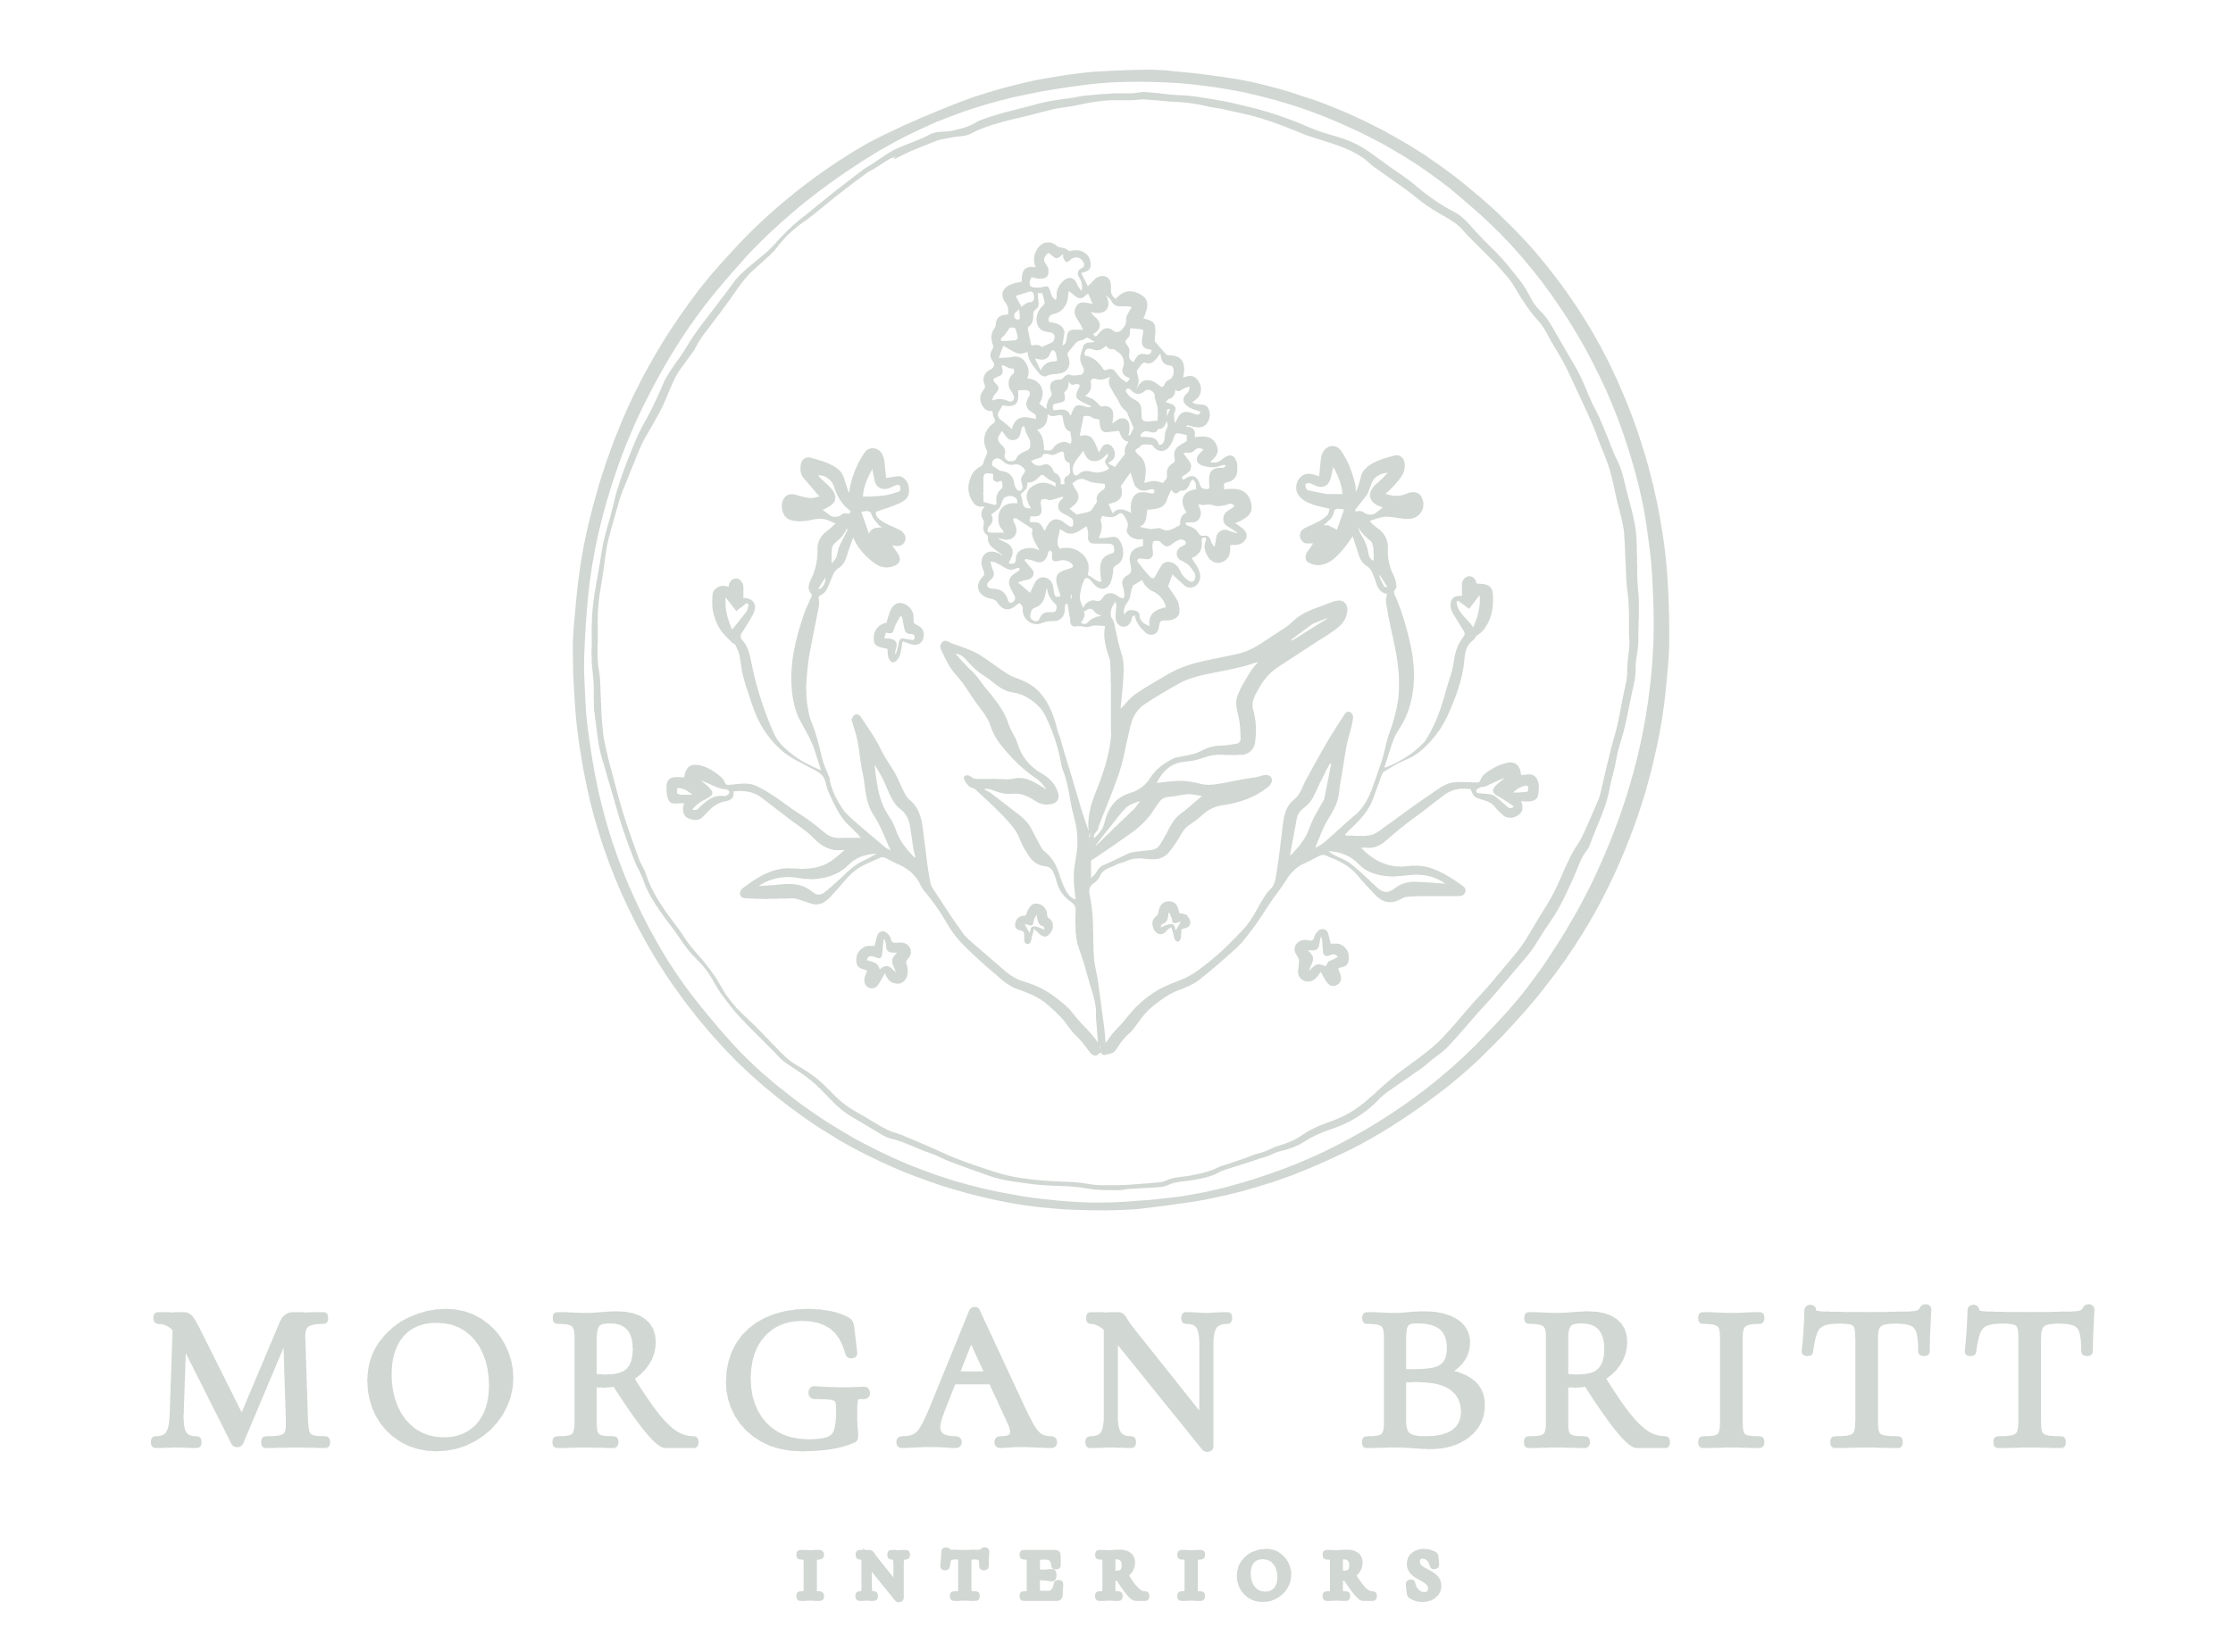 Morgan Britt Interiors